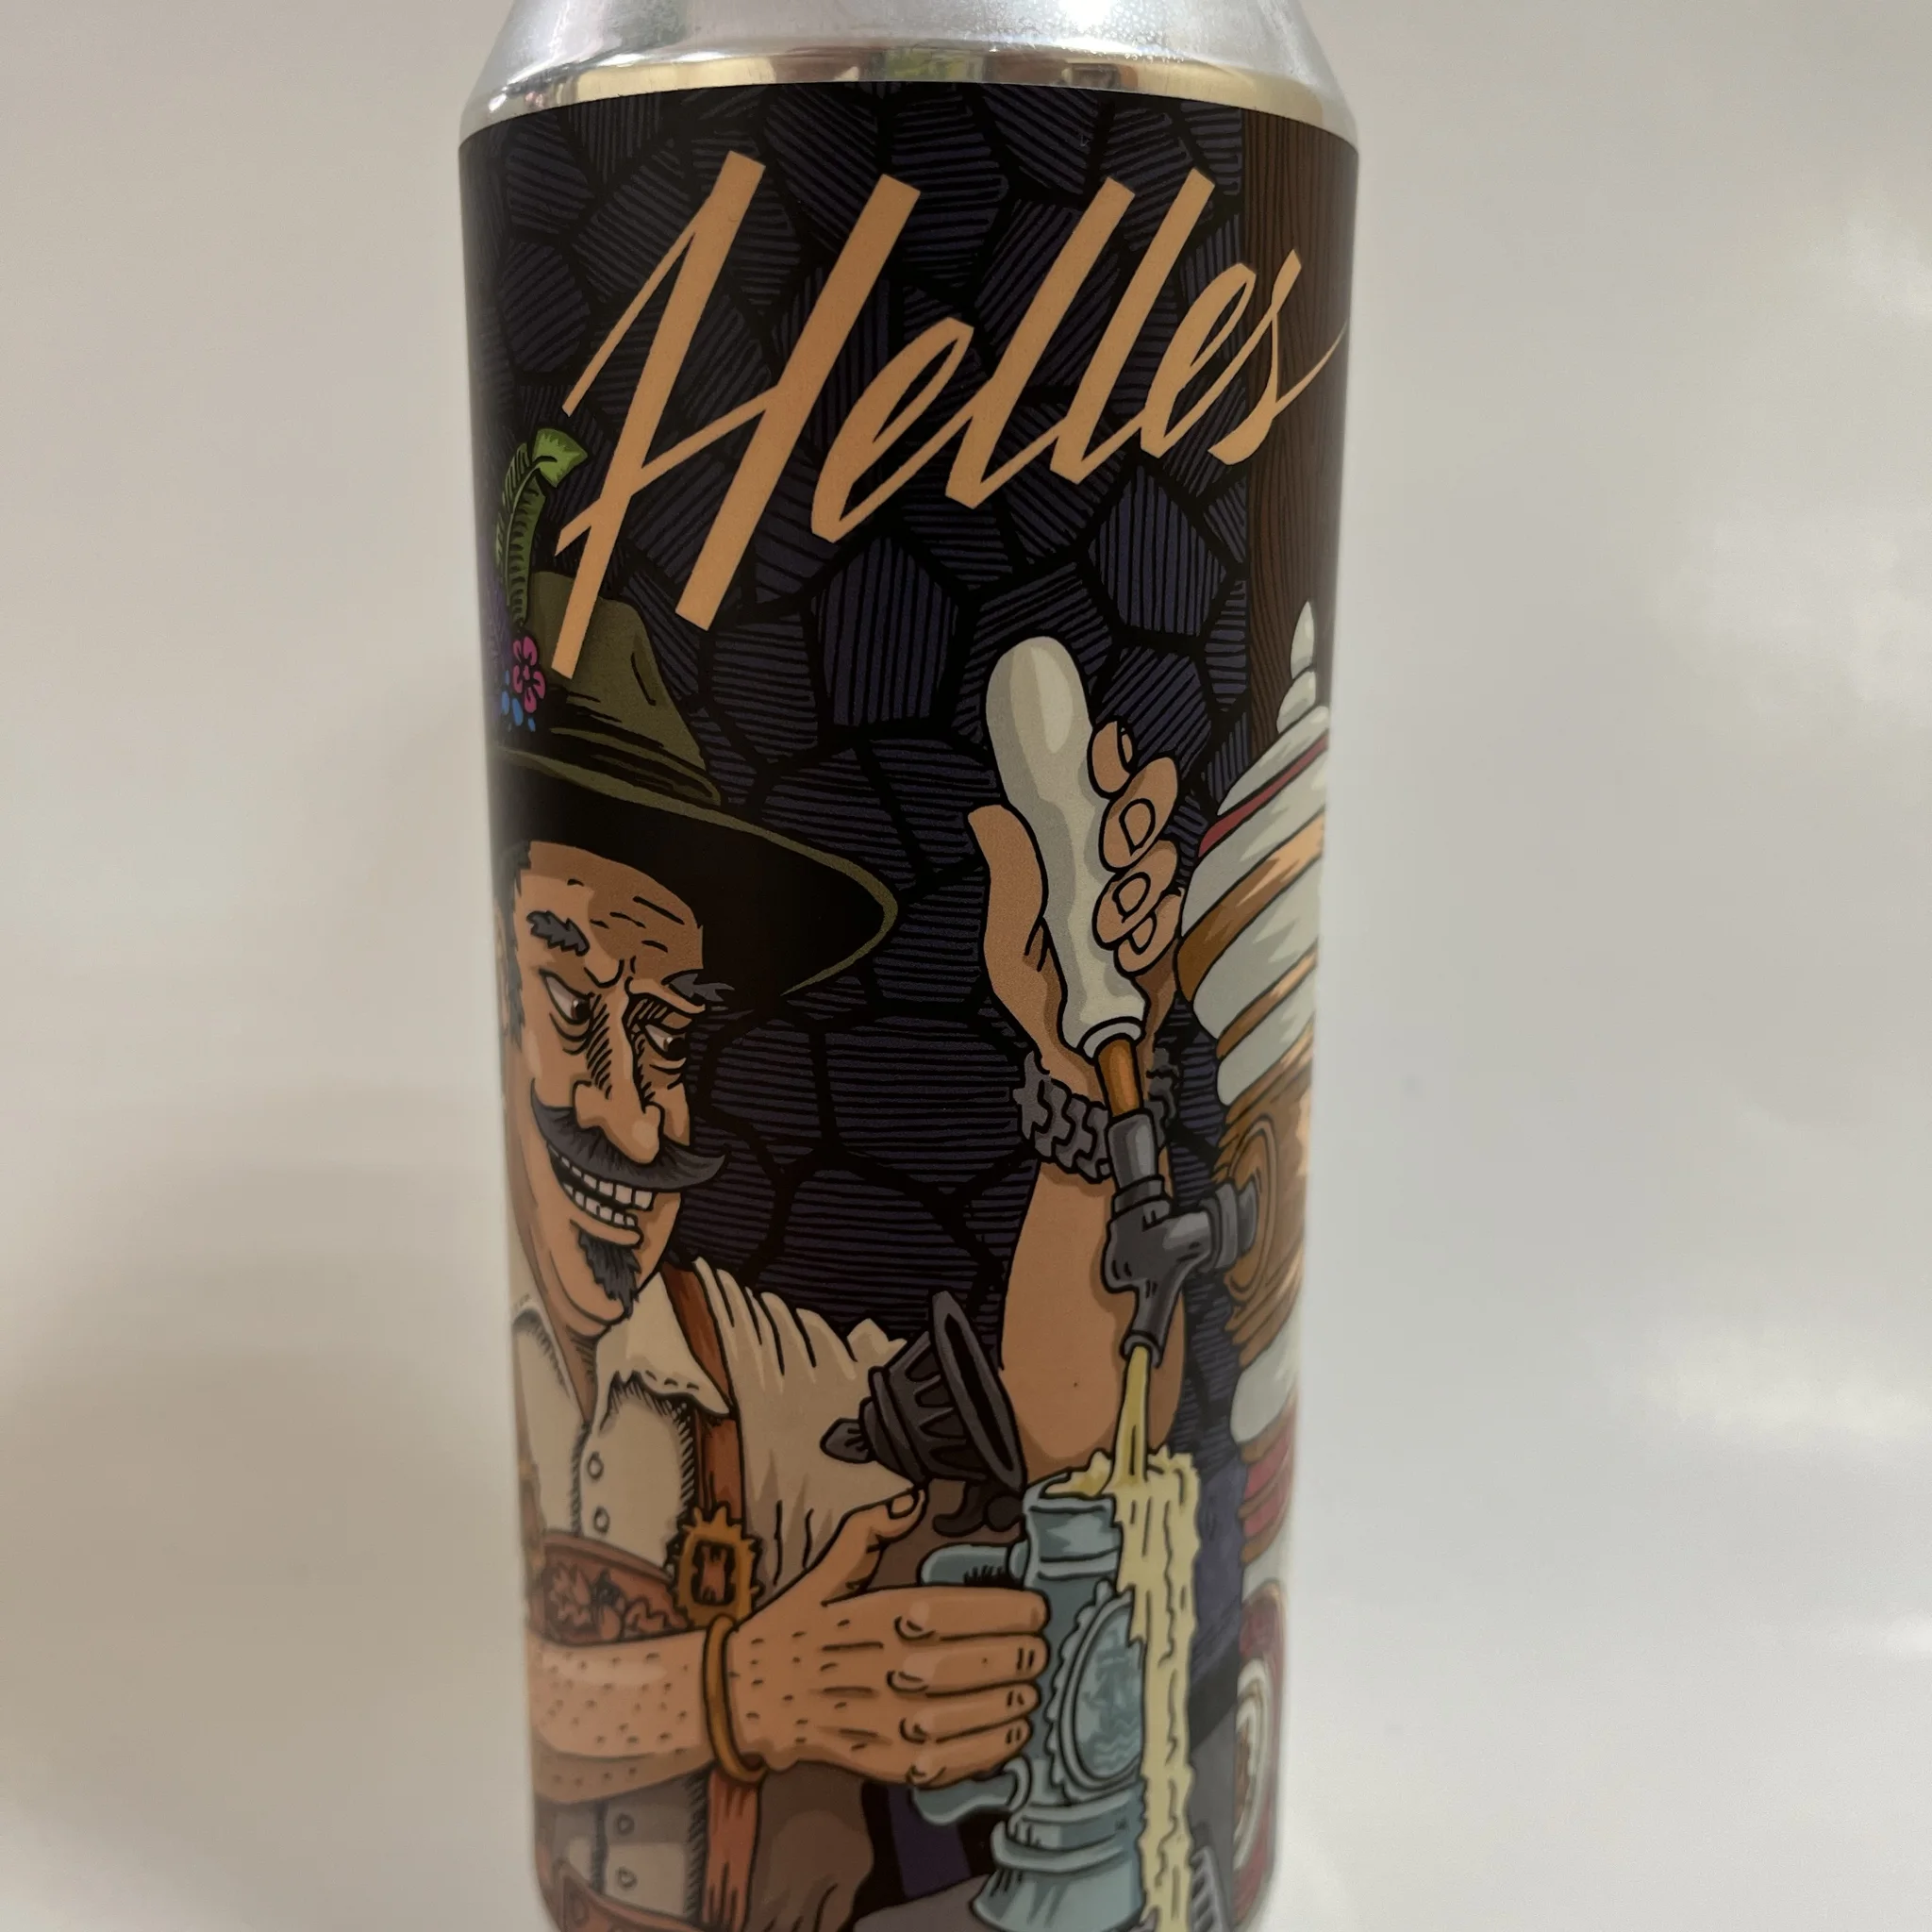 Пиво "Буржуй Хеллес"(Helles)